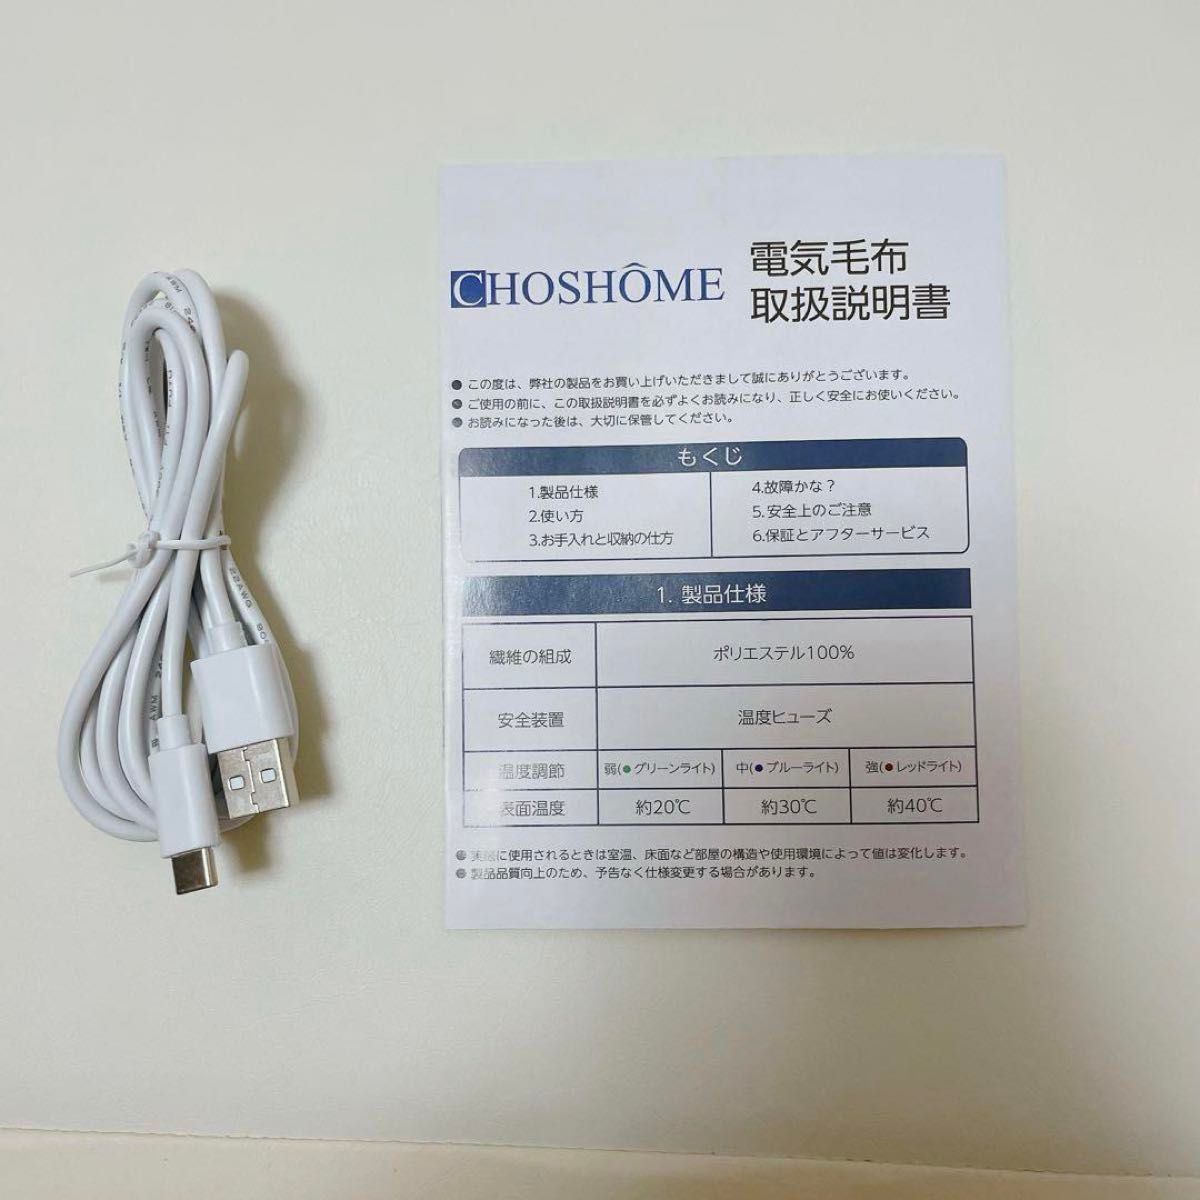 CHOSHOME 電気毛布 ひざ掛け u150×80cm 3段階温度調節洗える USBブランケット PSE認証済 チェックベージュ